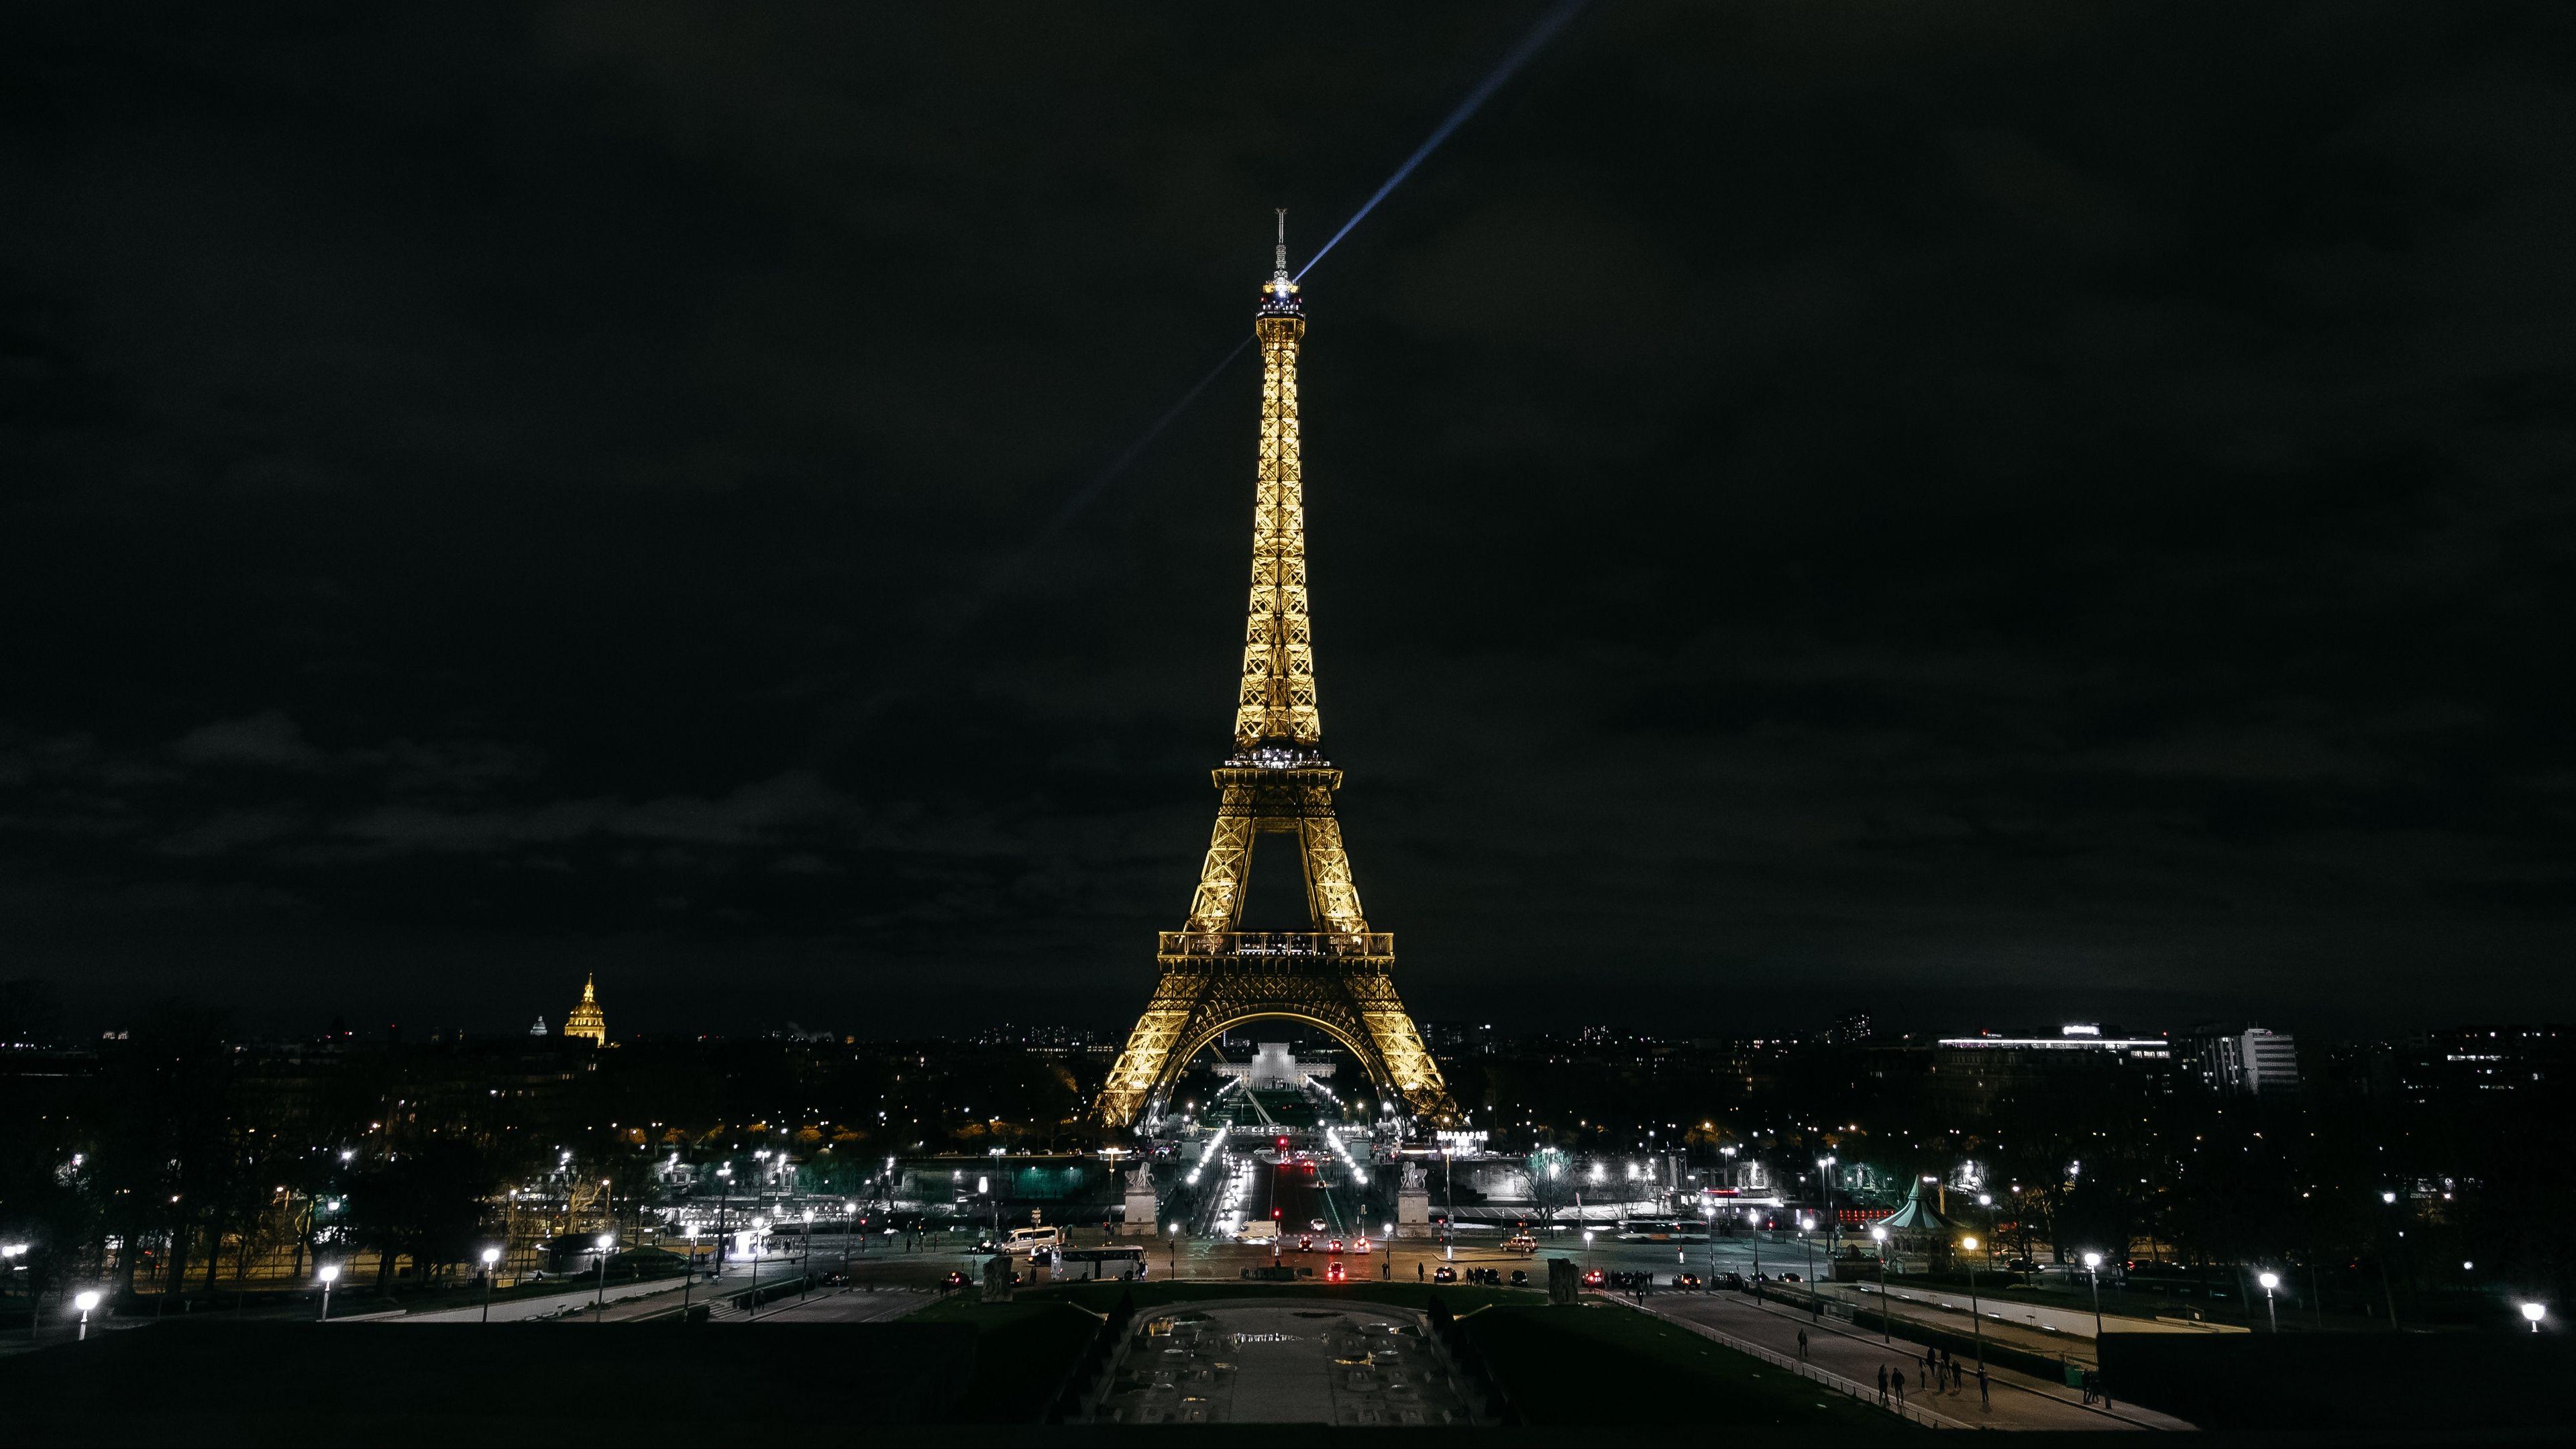 Download wallpaper 3840x2160 eiffel tower, paris, night city, city